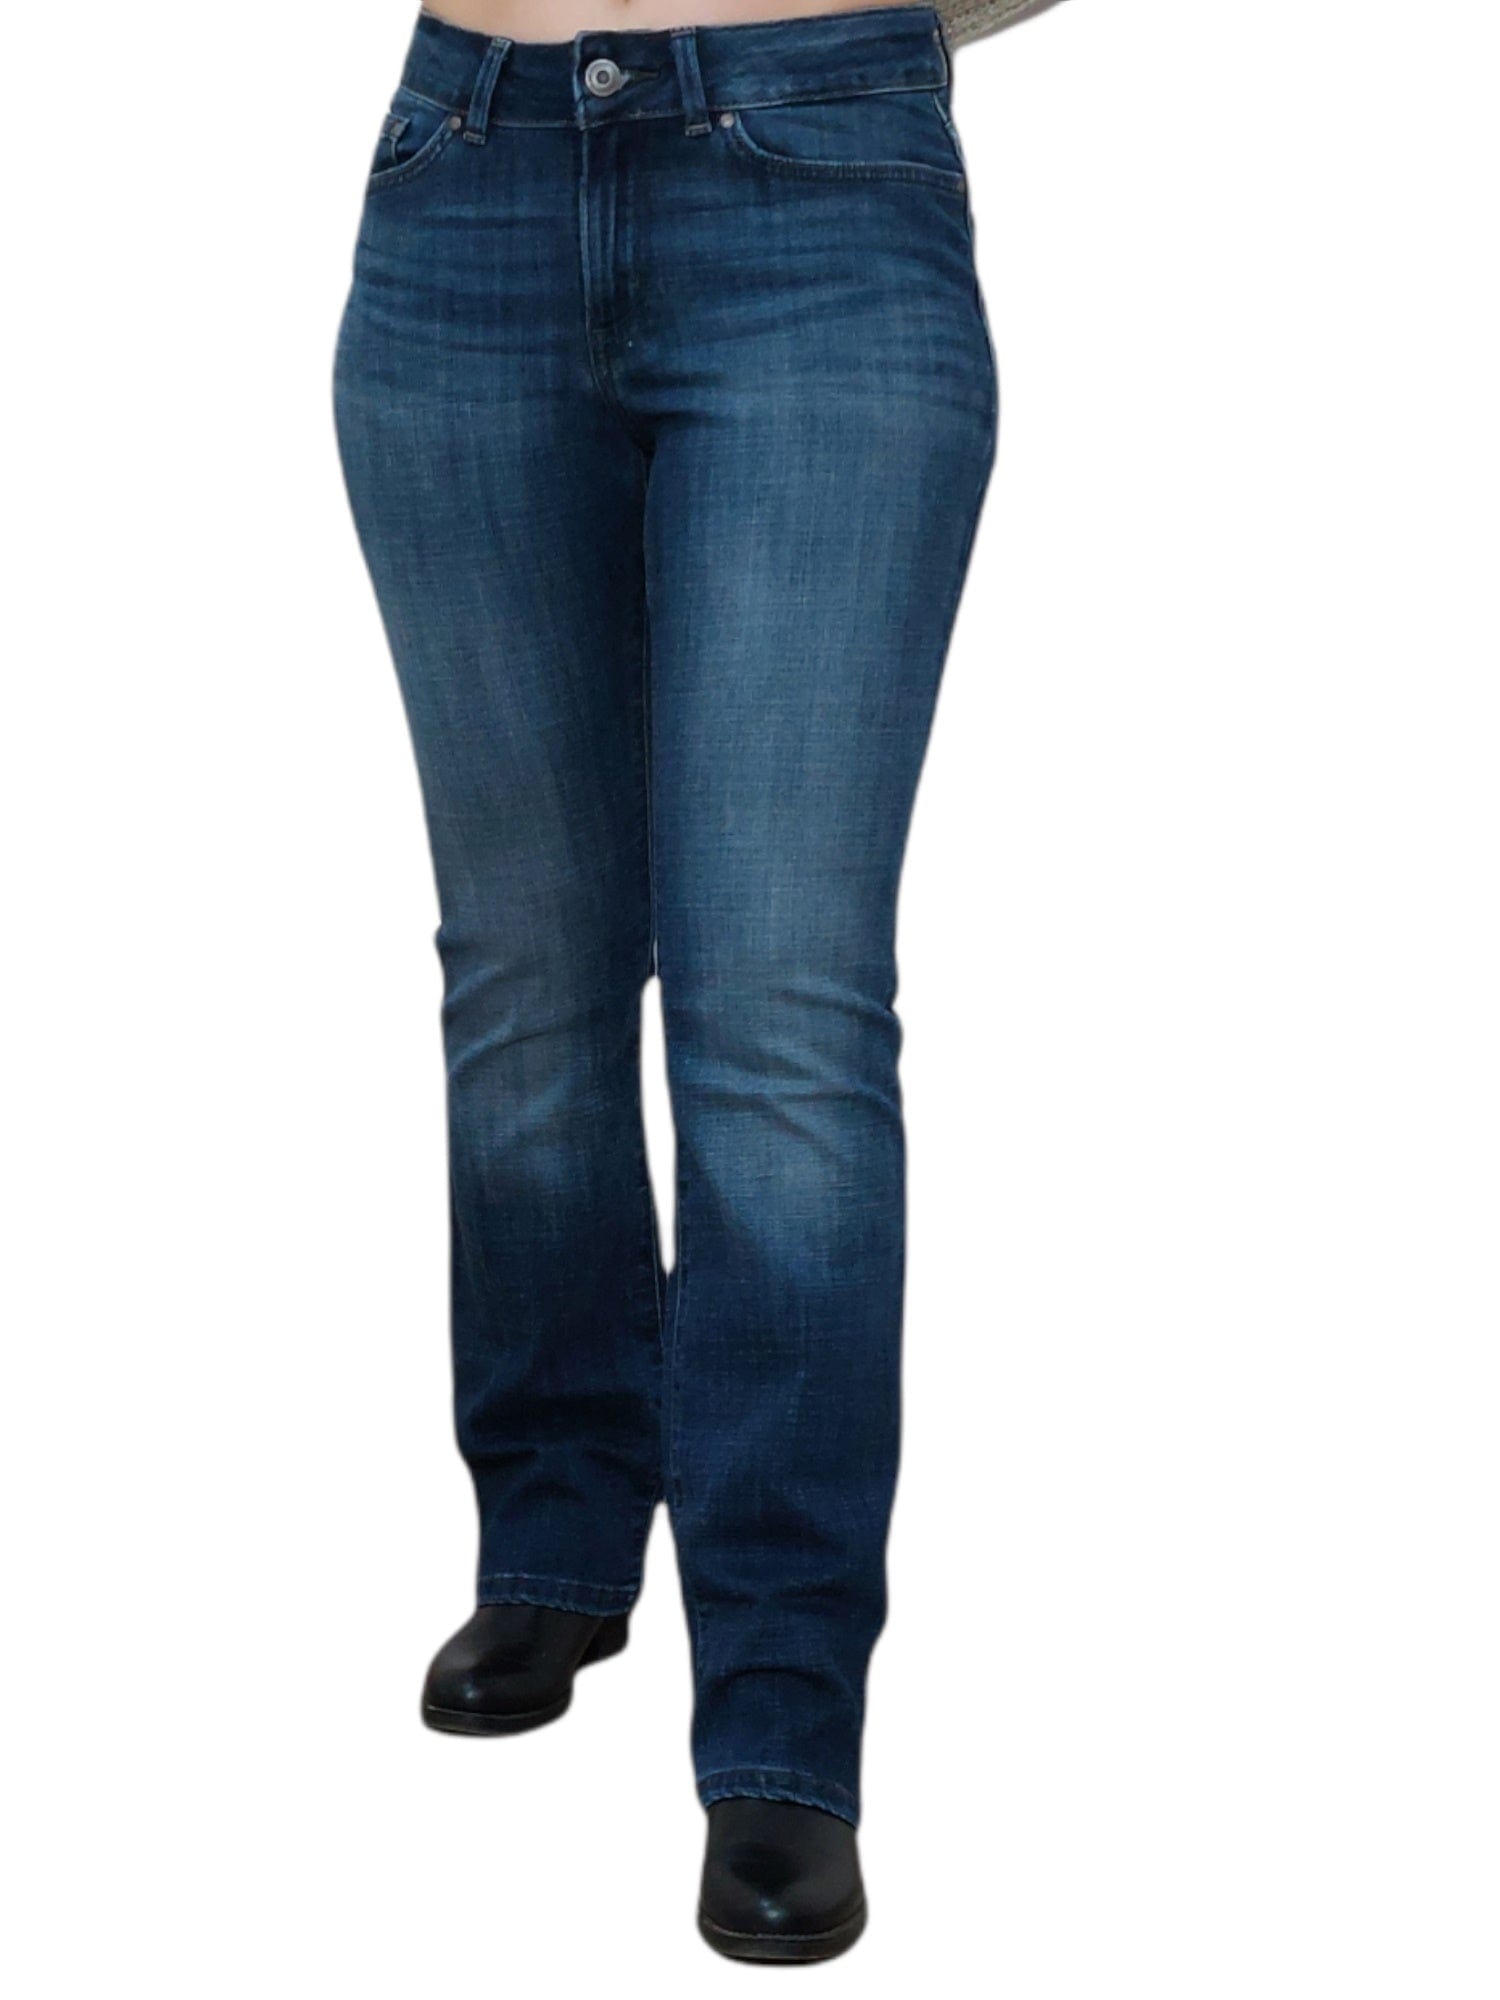 ElOutlet Pants Women Lee Jeans Pants (Boot Cut) - Dark Blue